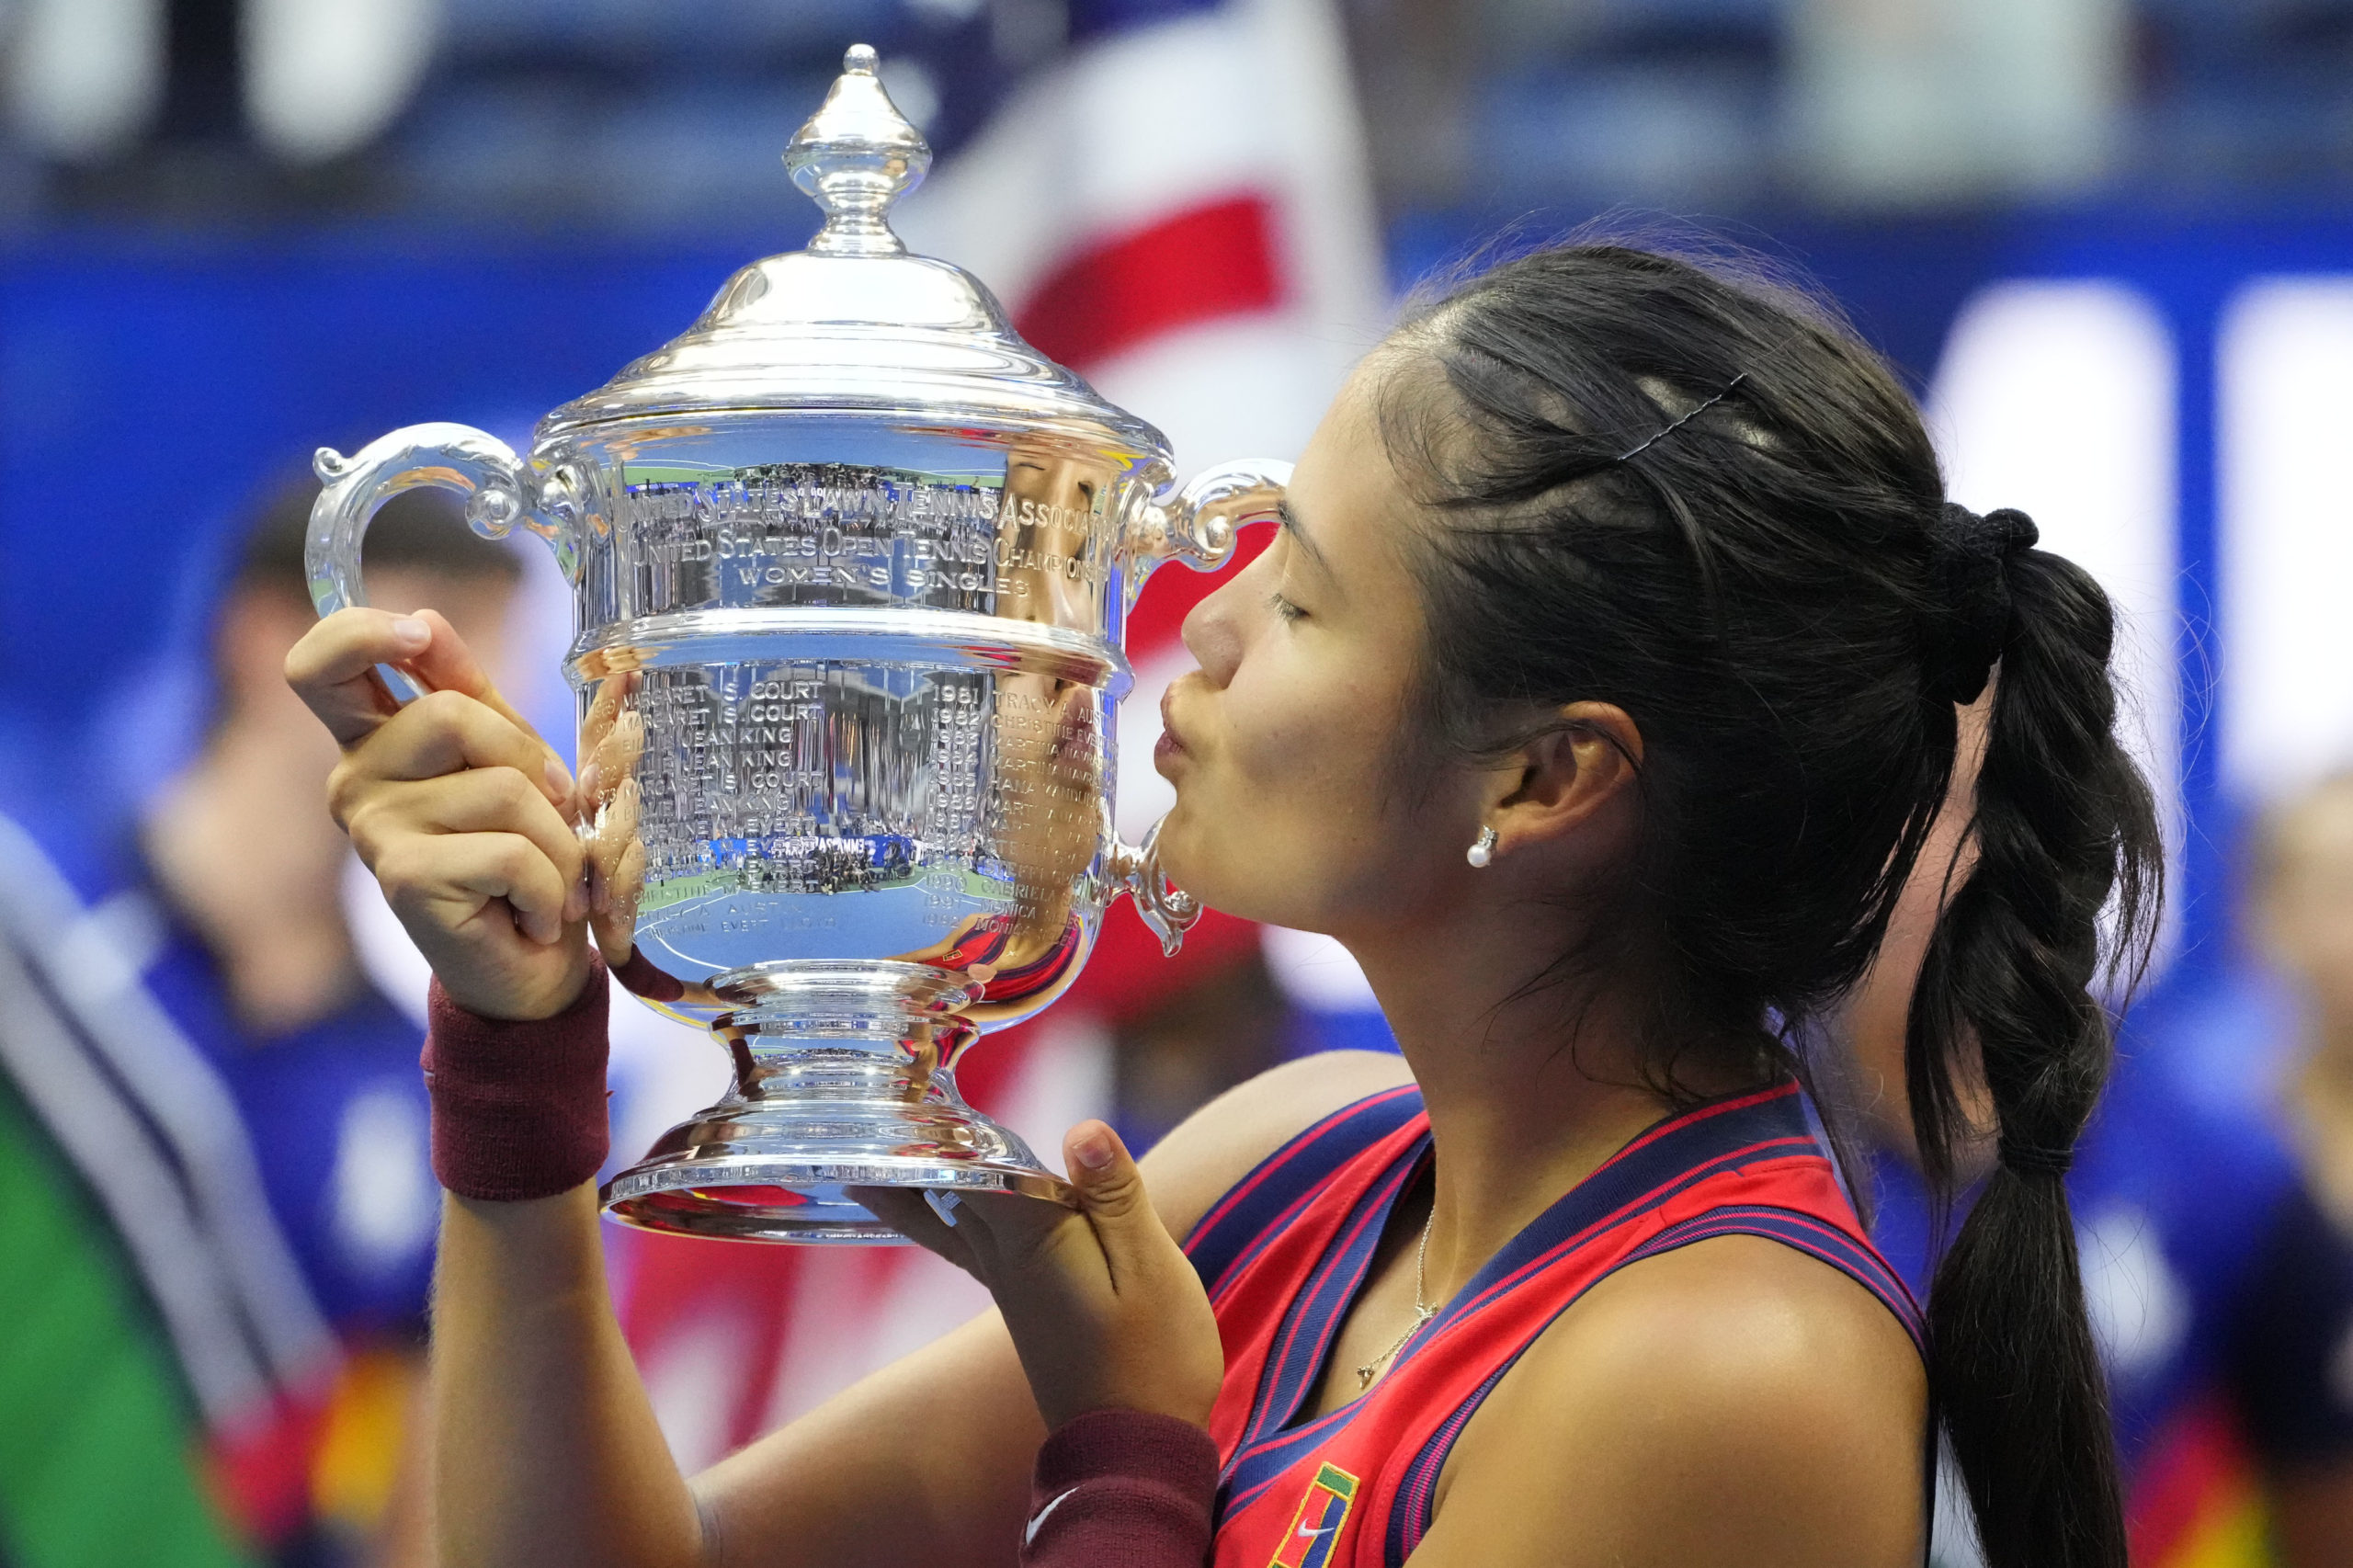 Emma Raducanu 2021 US Open